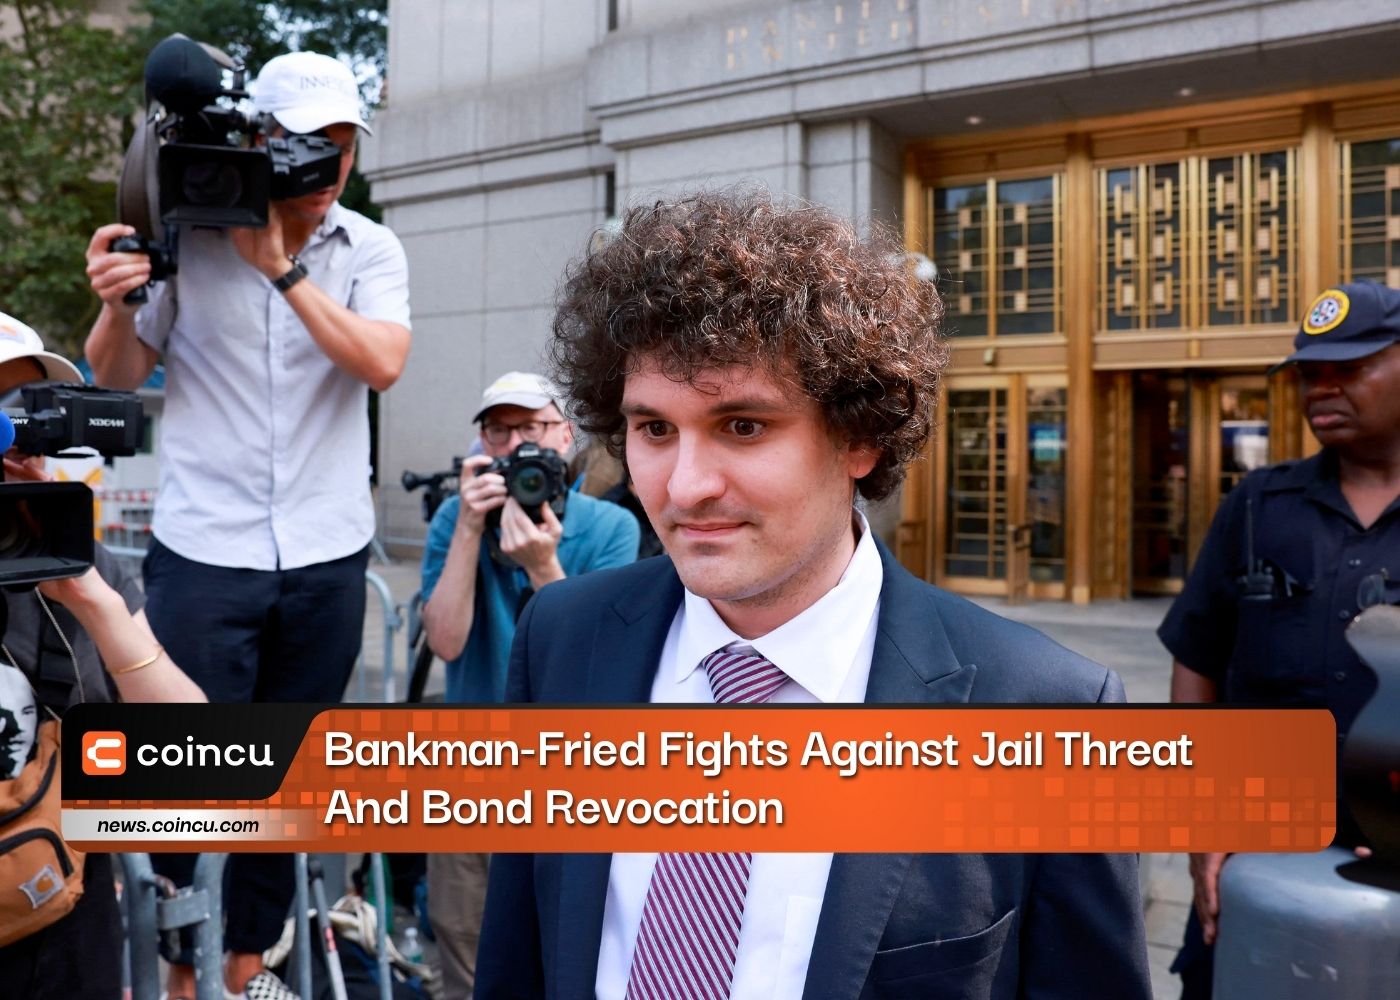 Bankman-Fried는 감옥 위협 및 채권 철회에 맞서 싸웁니다.